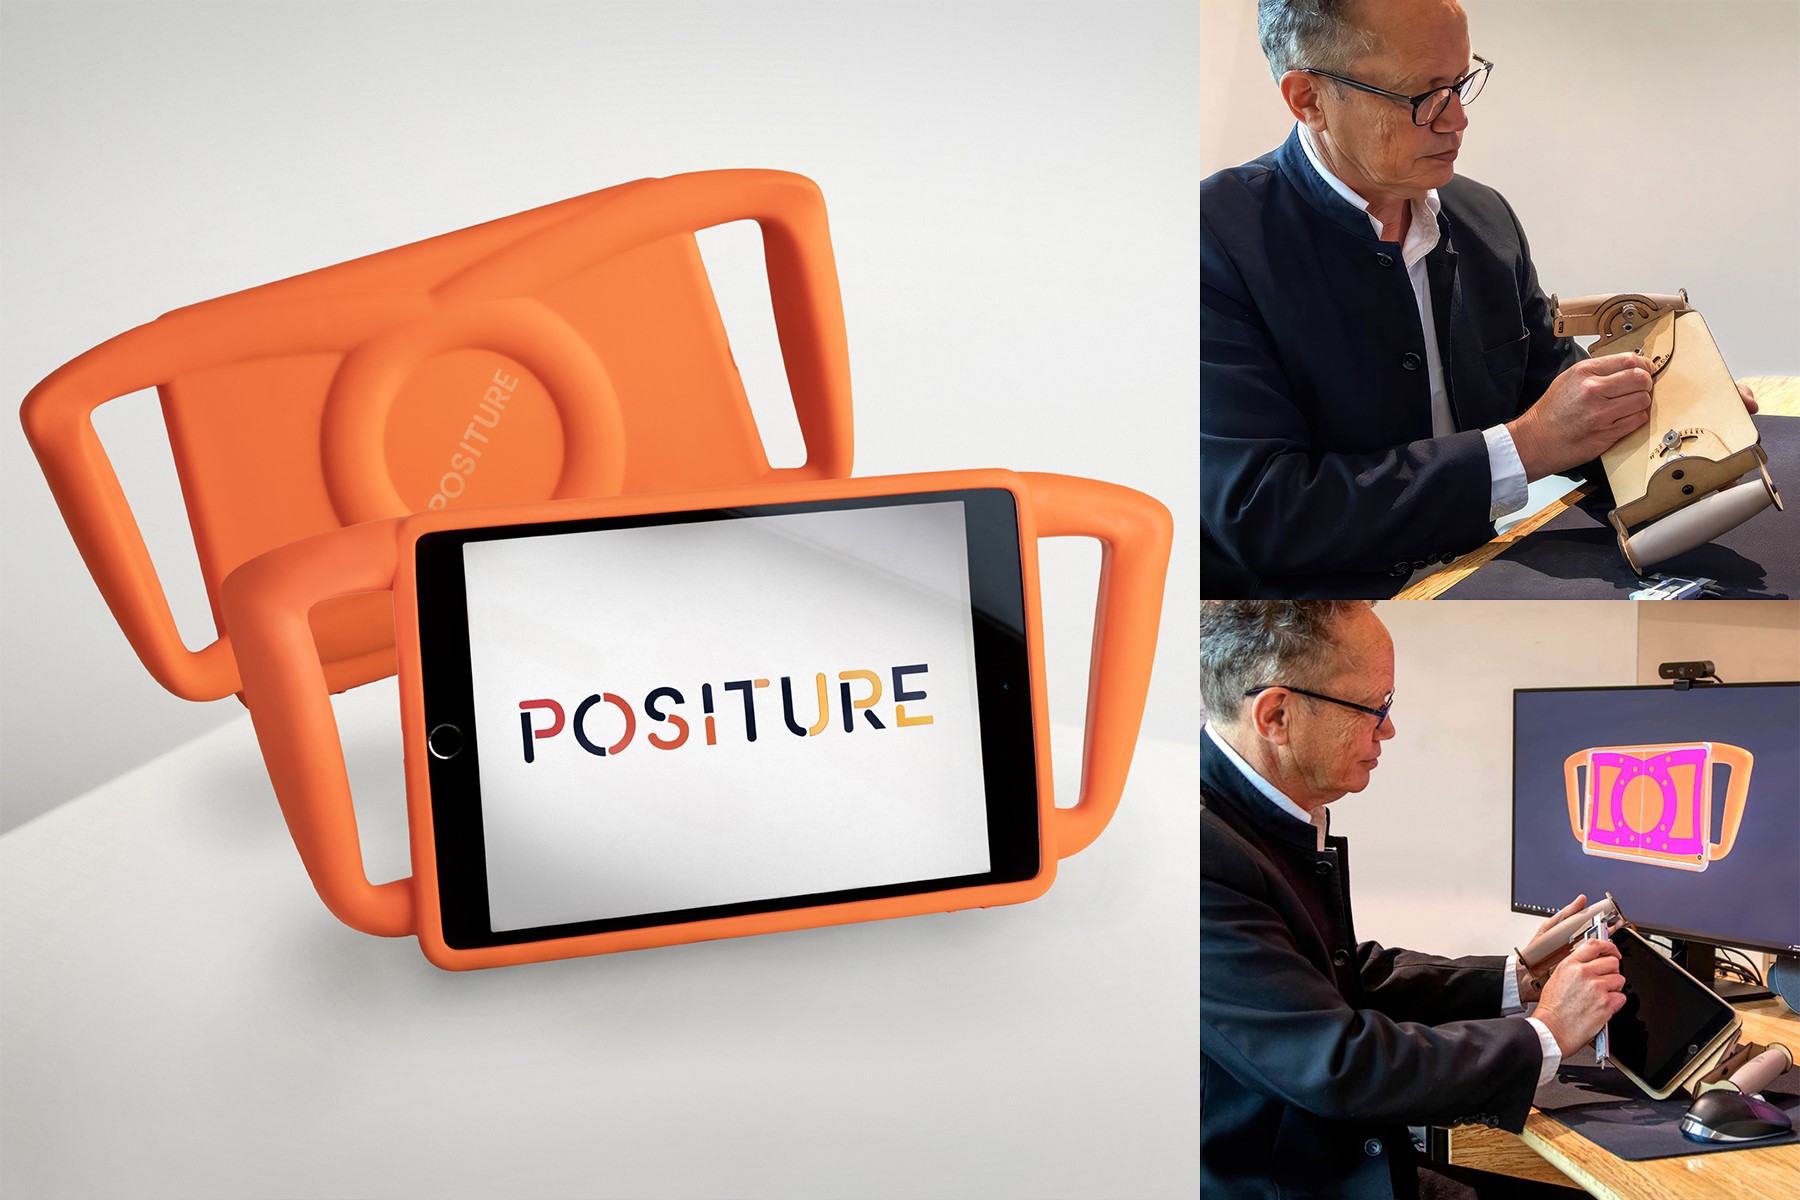 Positure Grip Posture controller for children’s tablet use